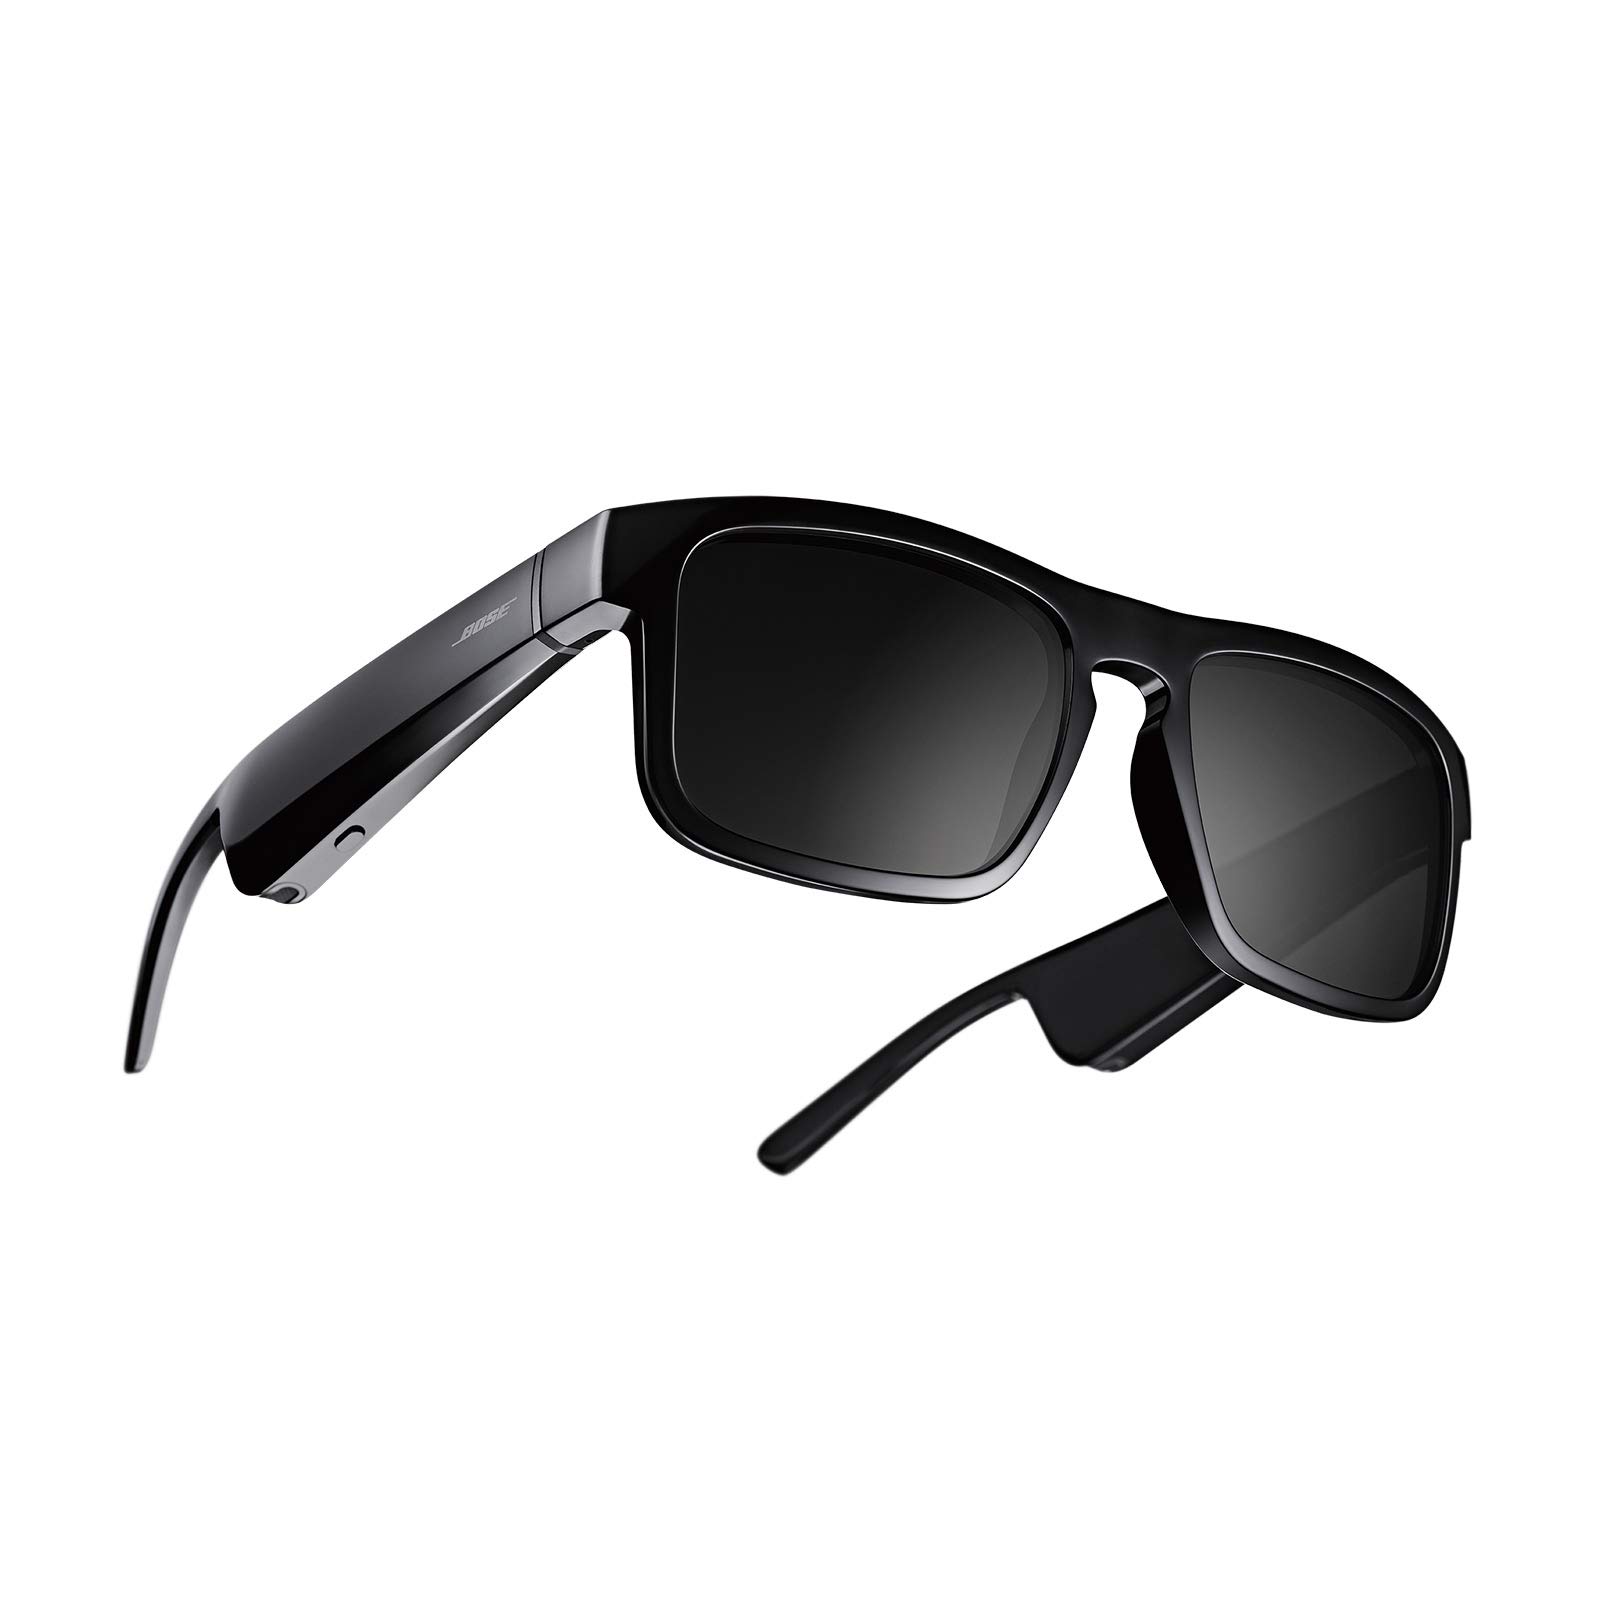 BOSE Frames Tenor, Smart Glasses, Bluetooth Audio Sungl...